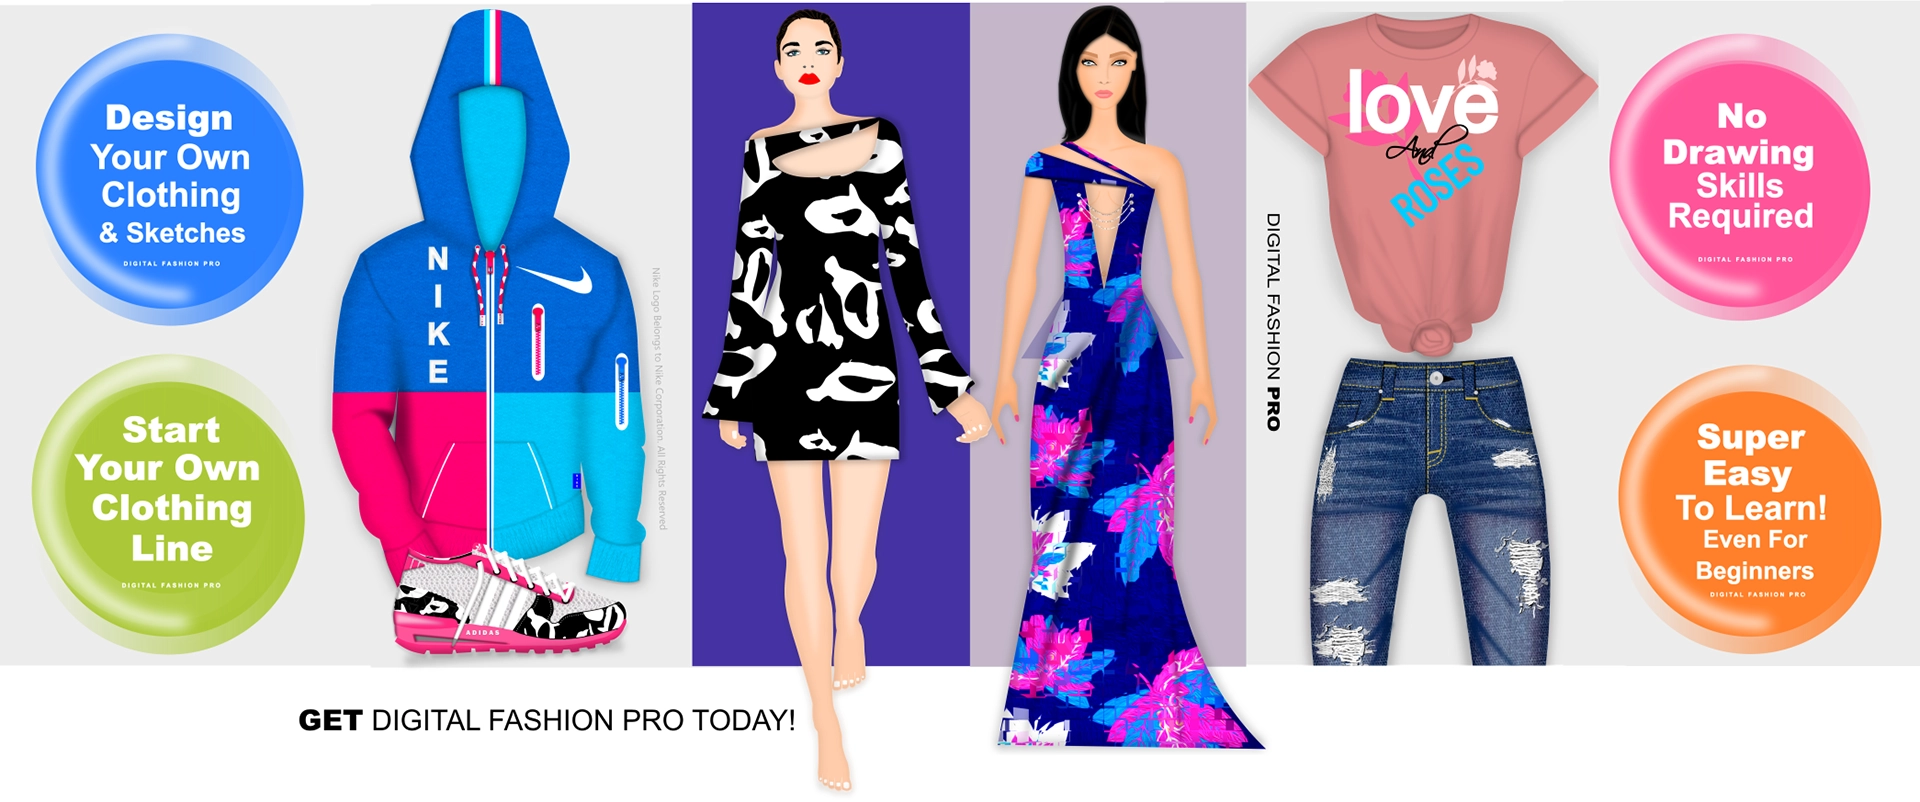 erven uitsterven Er is behoefte aan Fashion Design Software, Design Your Own Clothes, Fashion Sketches